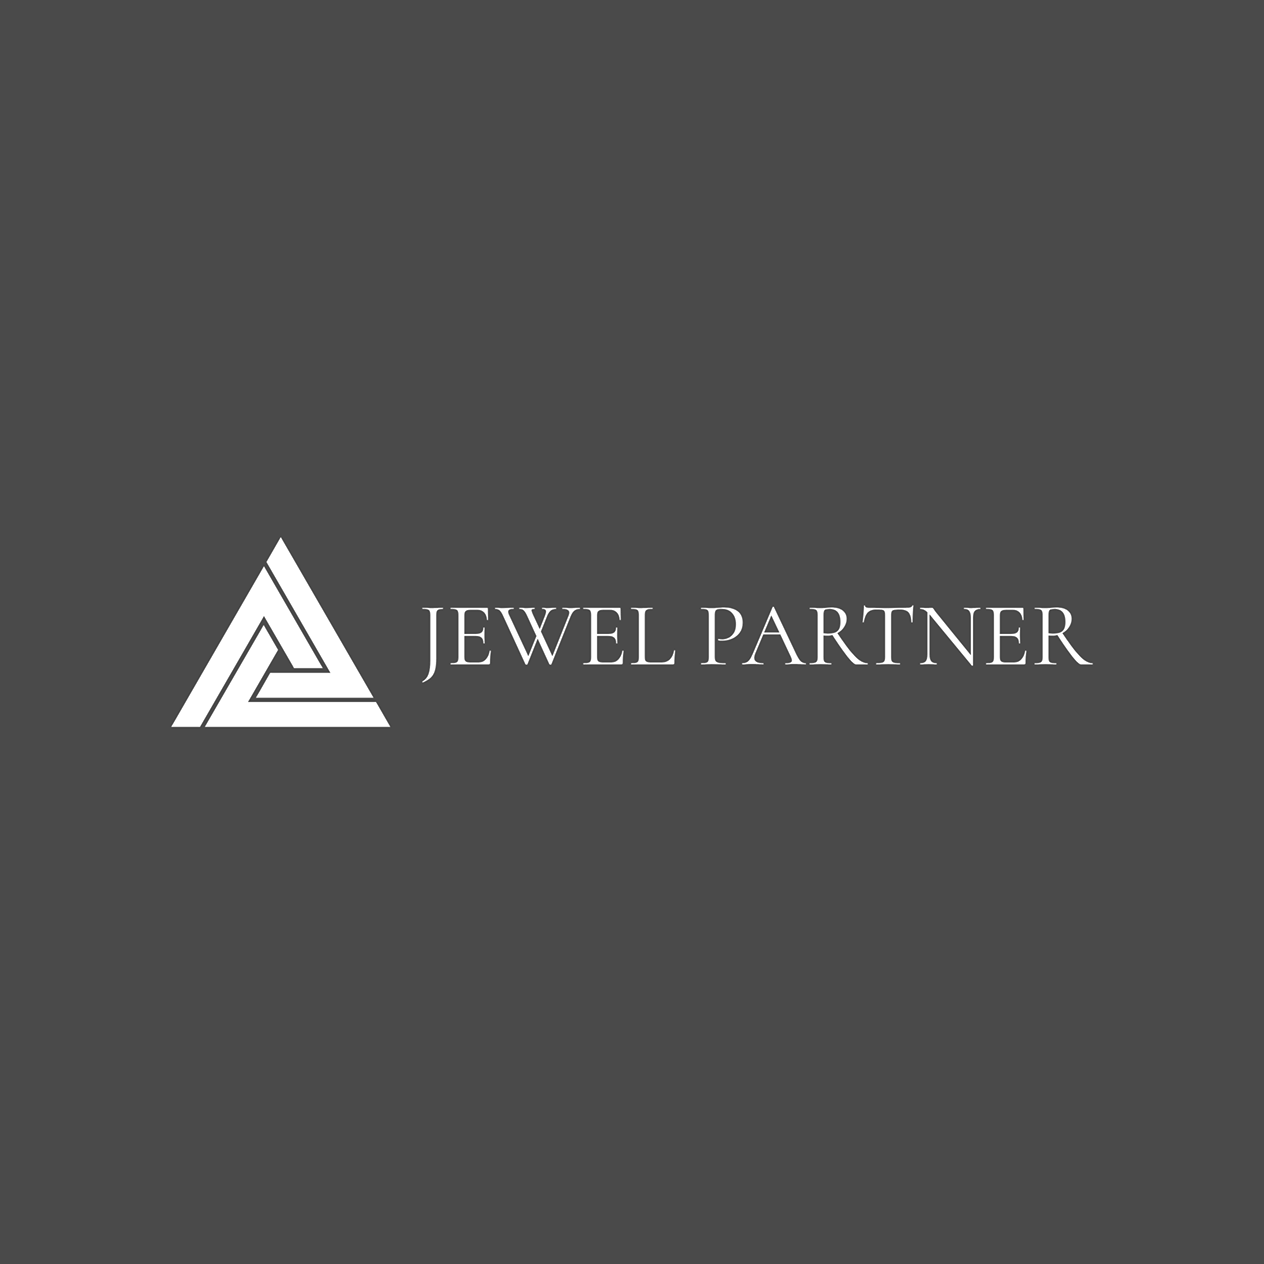 Jewel Partner